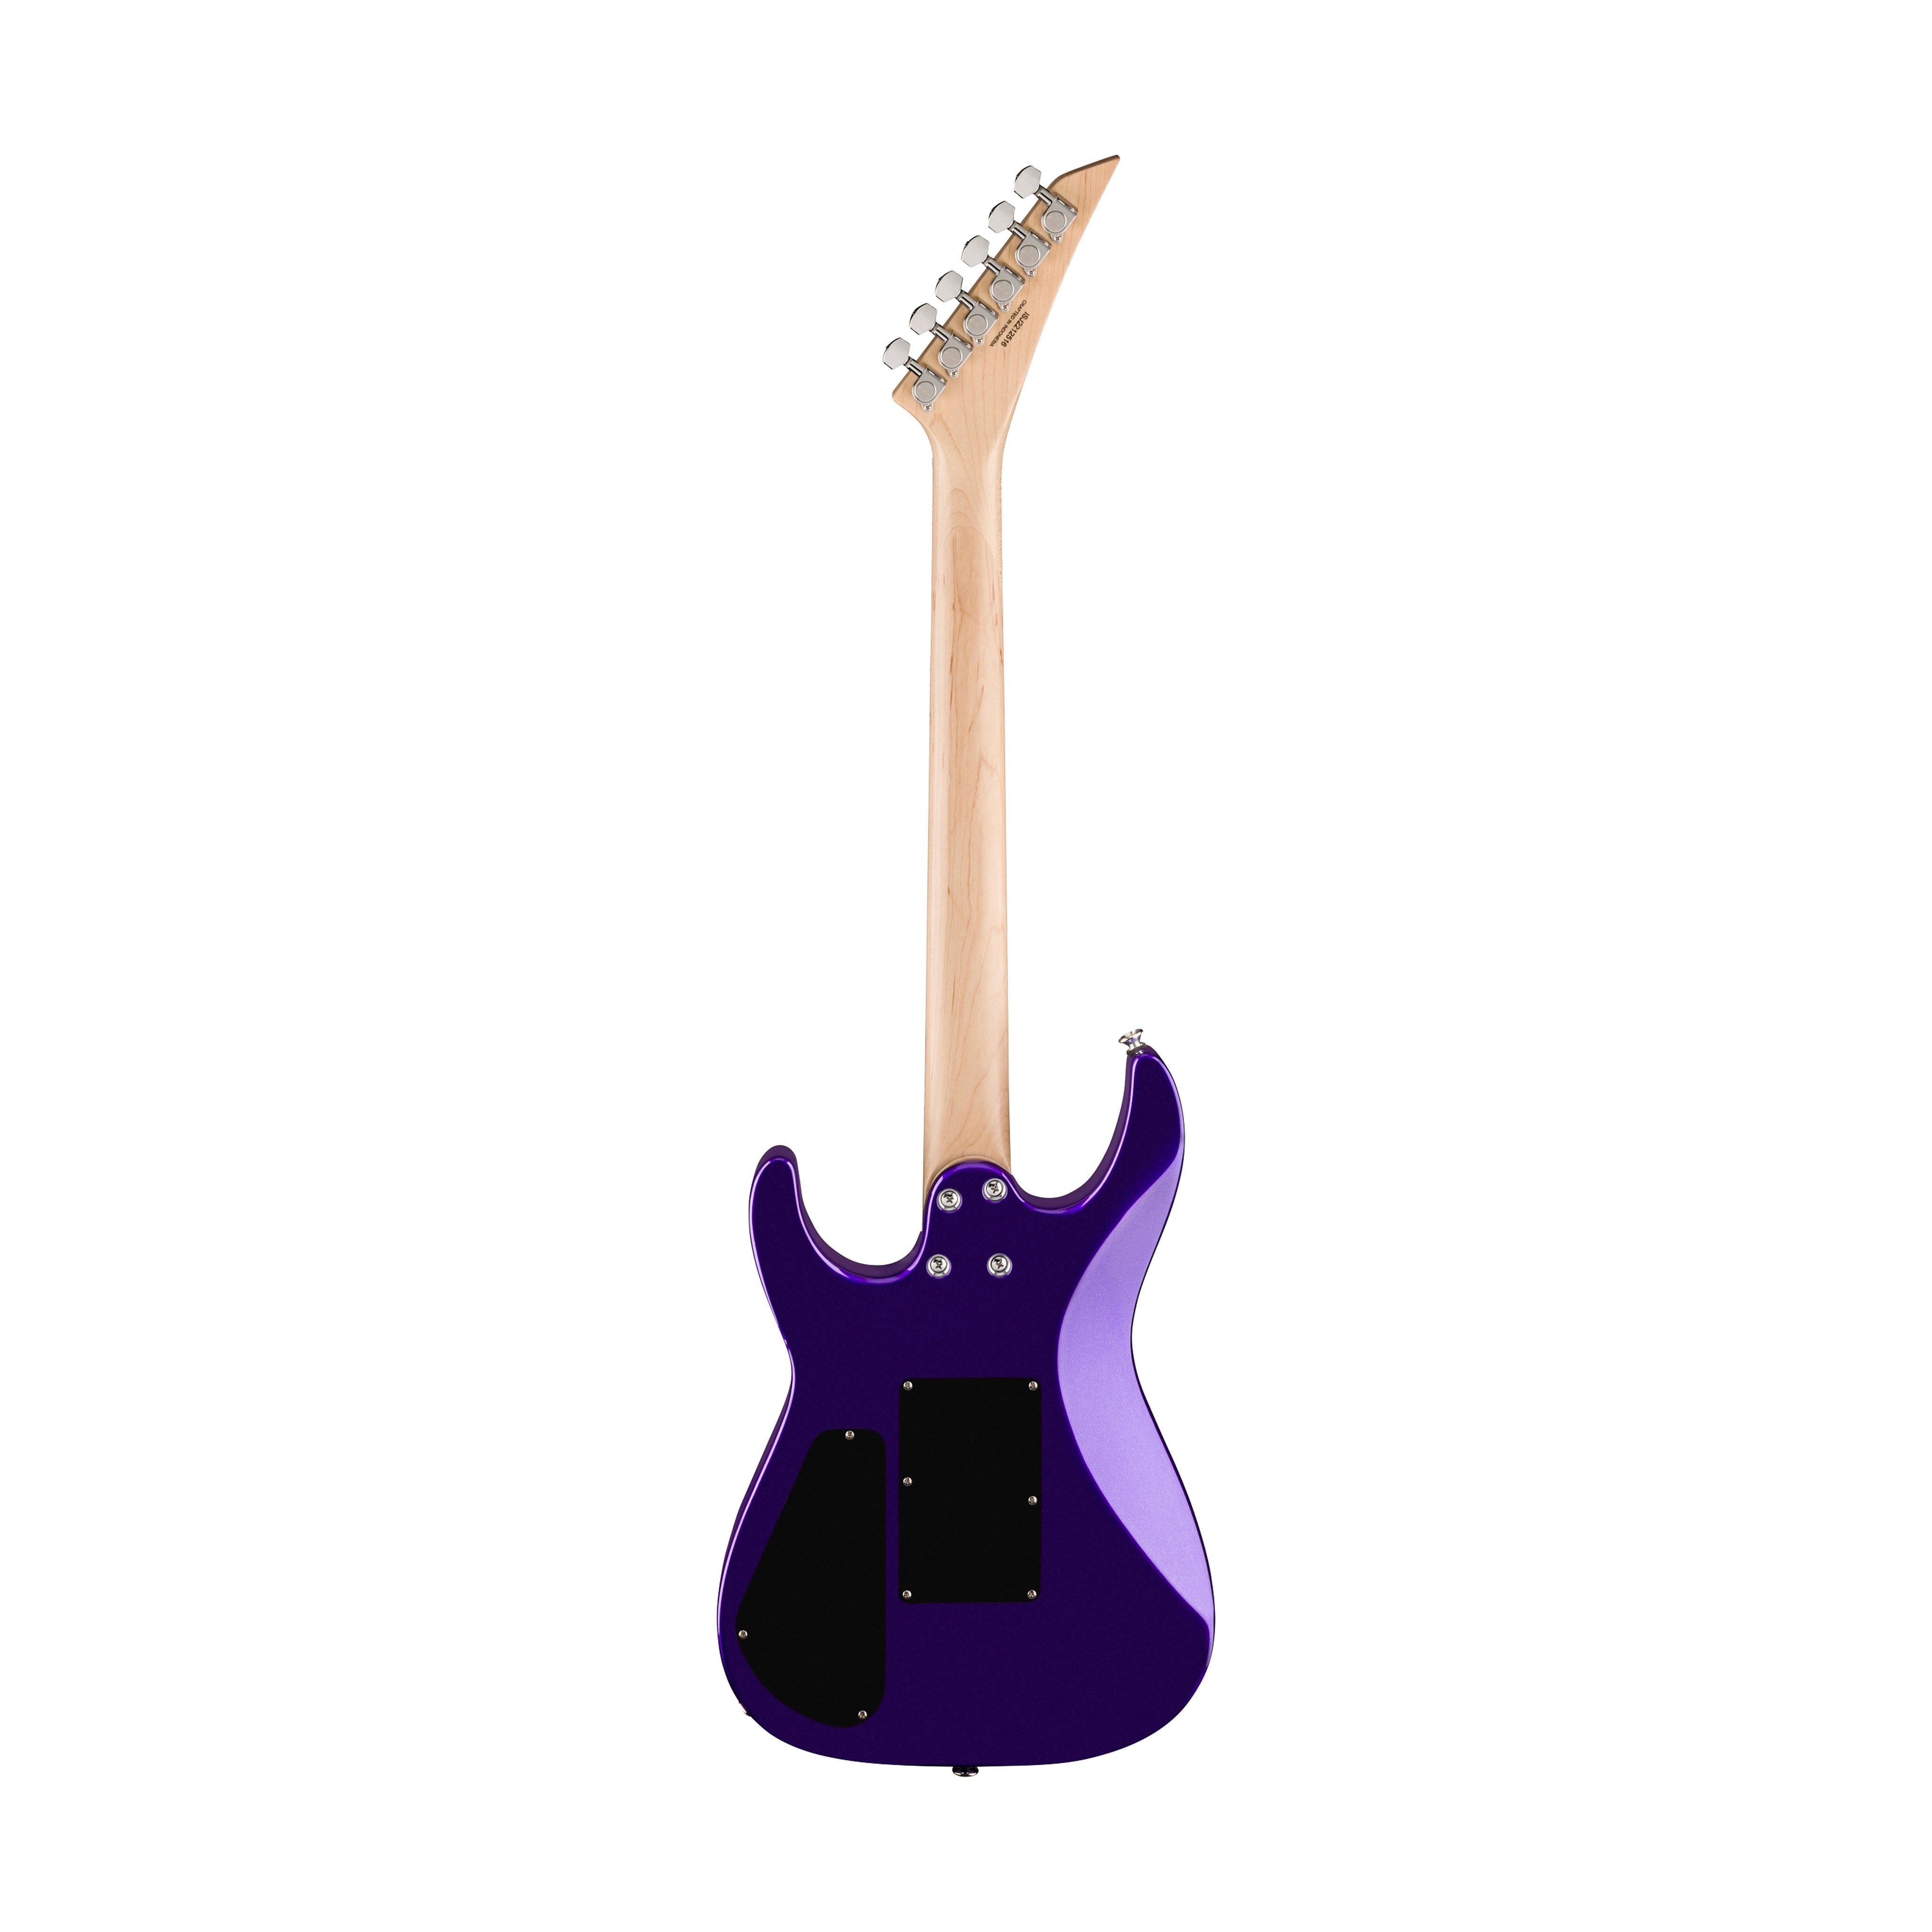 Jackson X Series DK3XRM HSS Electric Guitar, Maple FB, Deep Purple Metallic